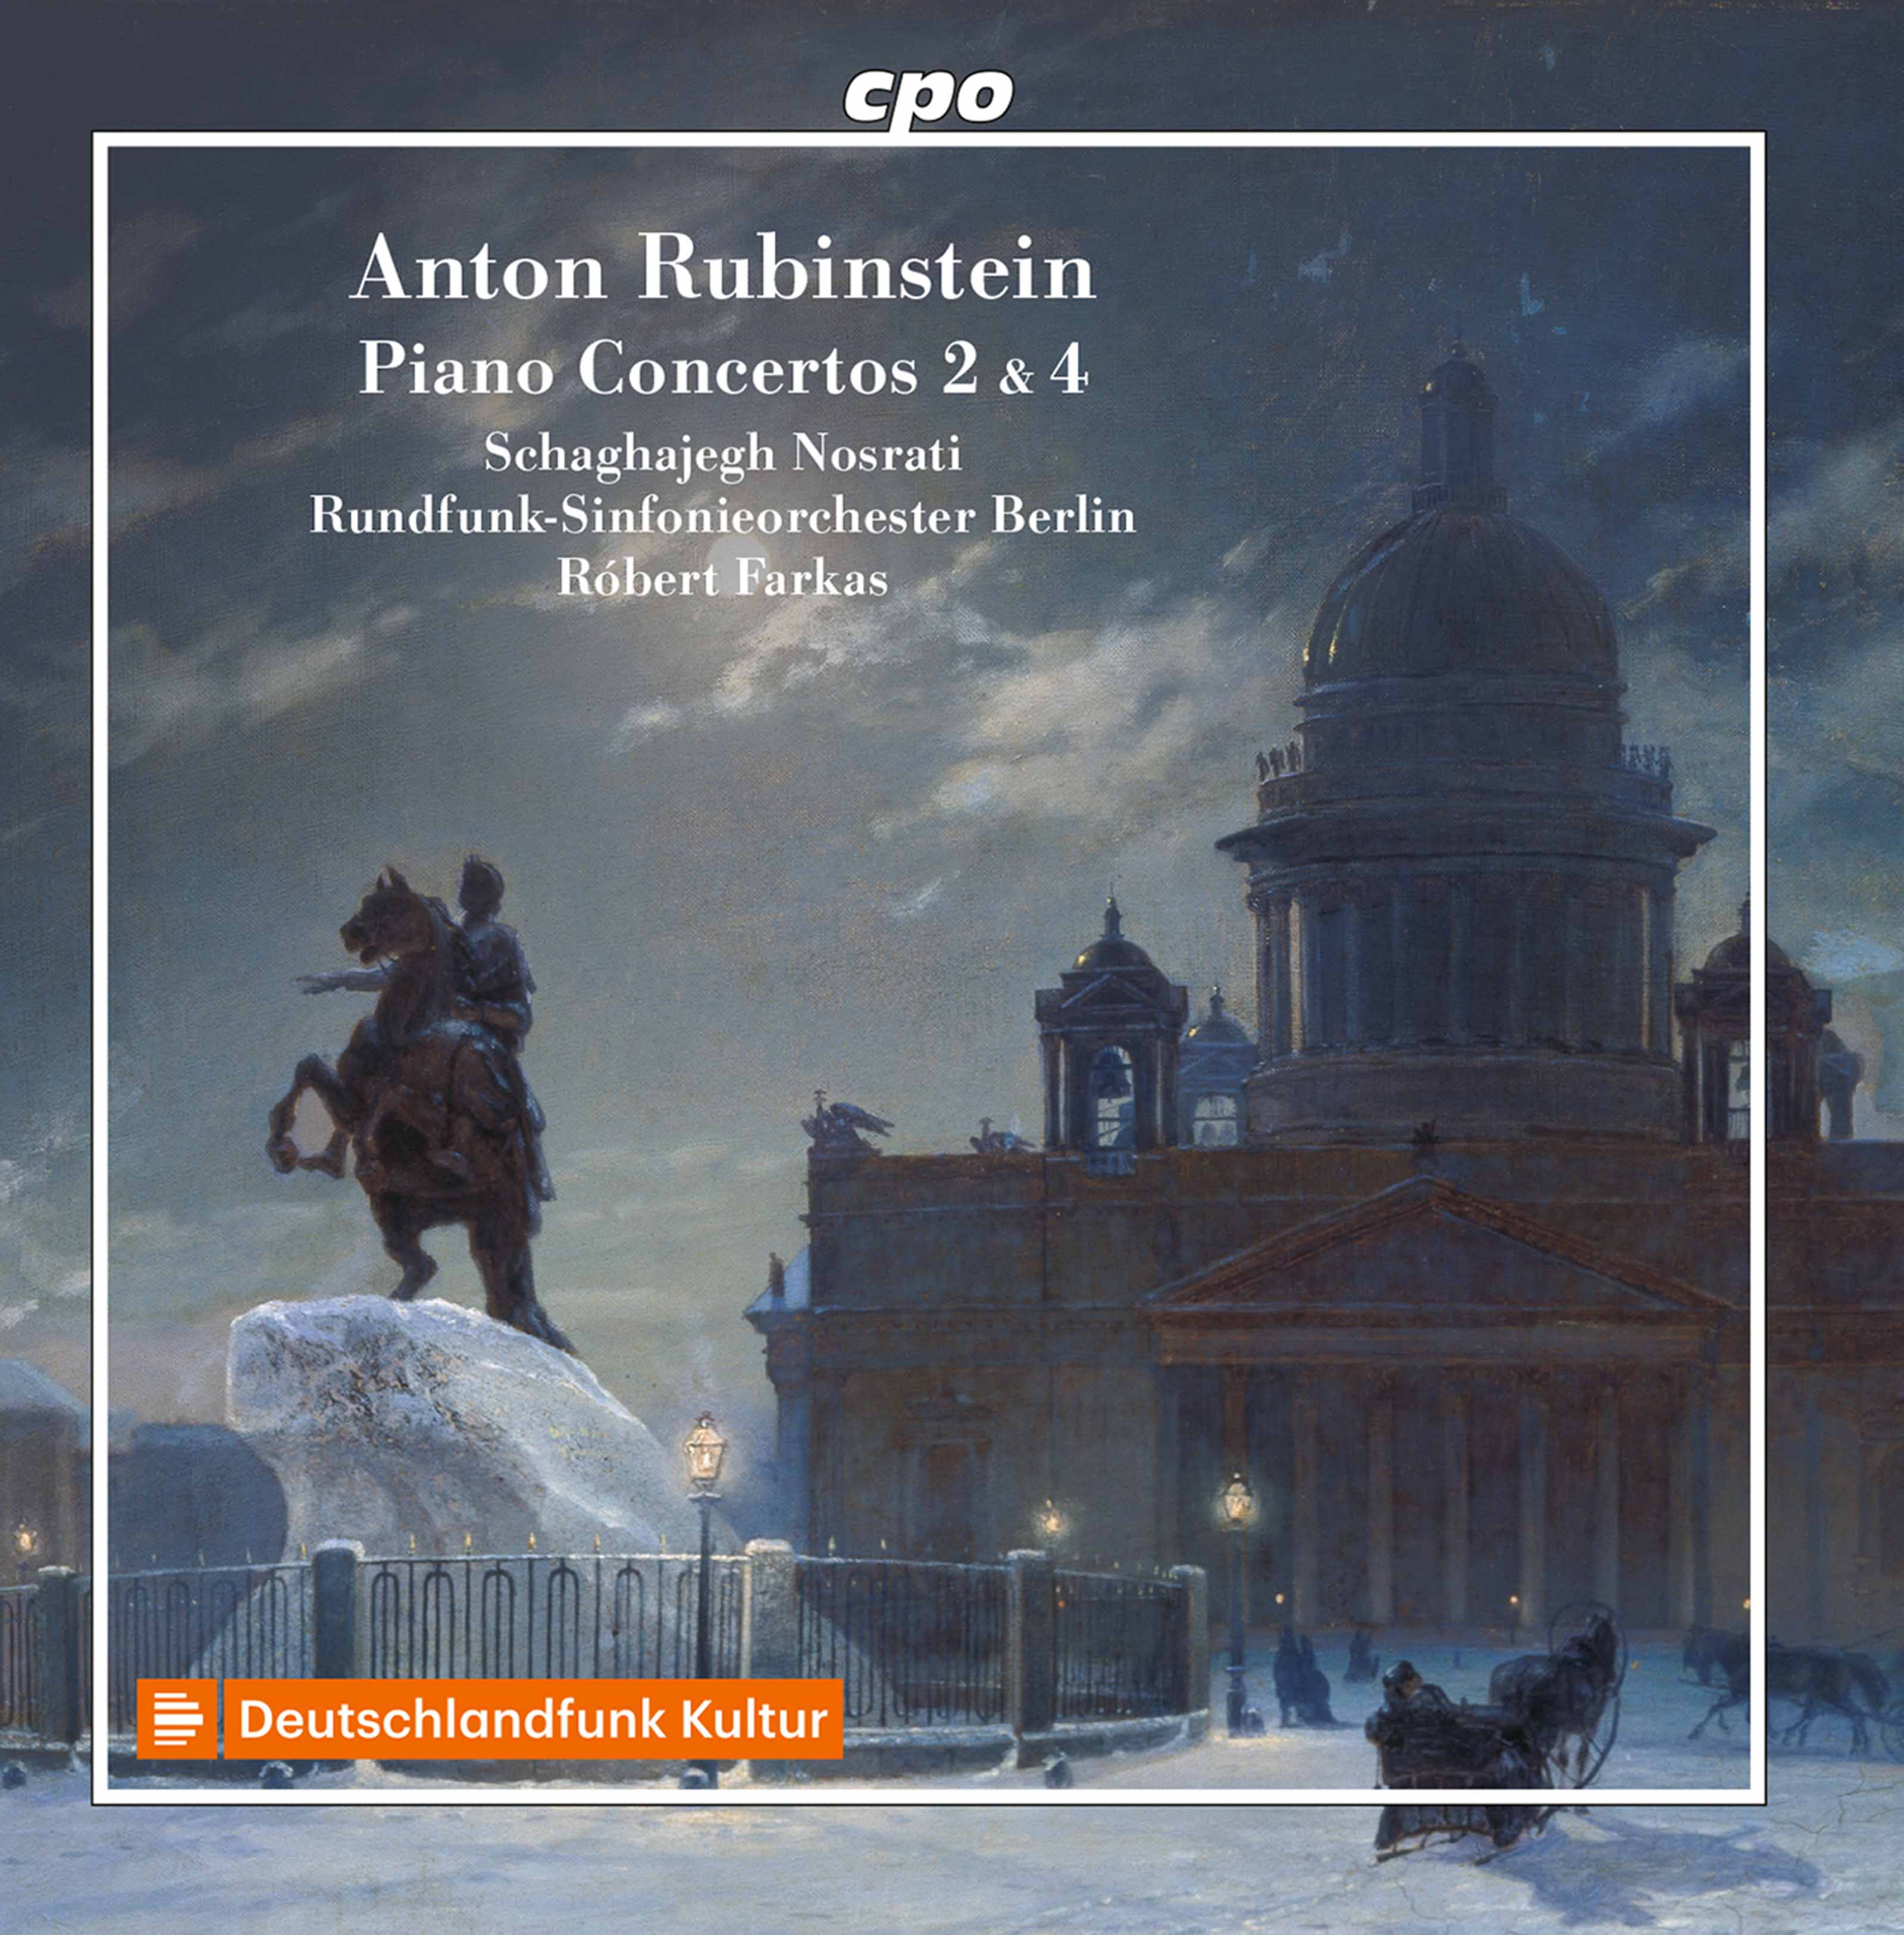 Anton Rubinstein Piano Concertos on cpo